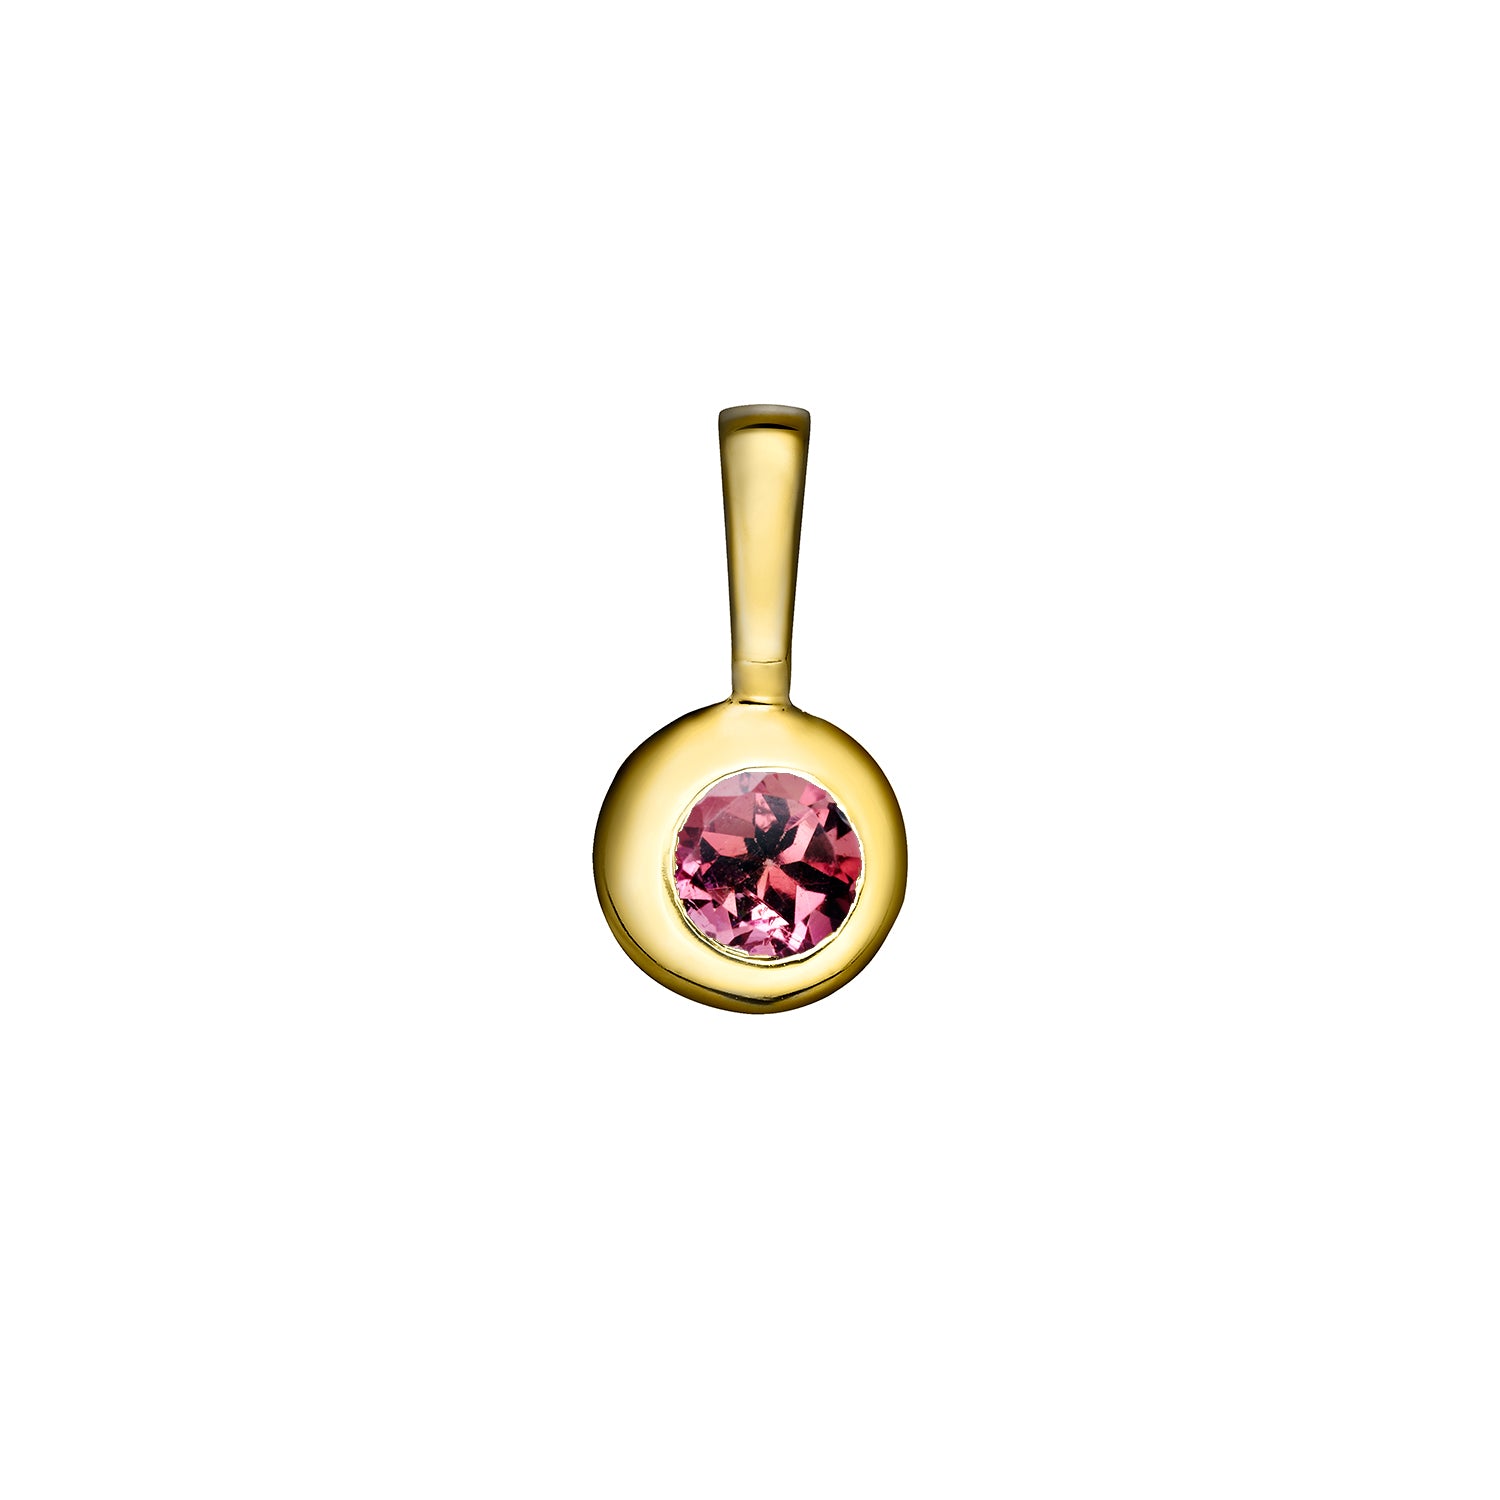 Polished Gold Vermeil Moon Birthstone Charm - October / Pink Tourmaline